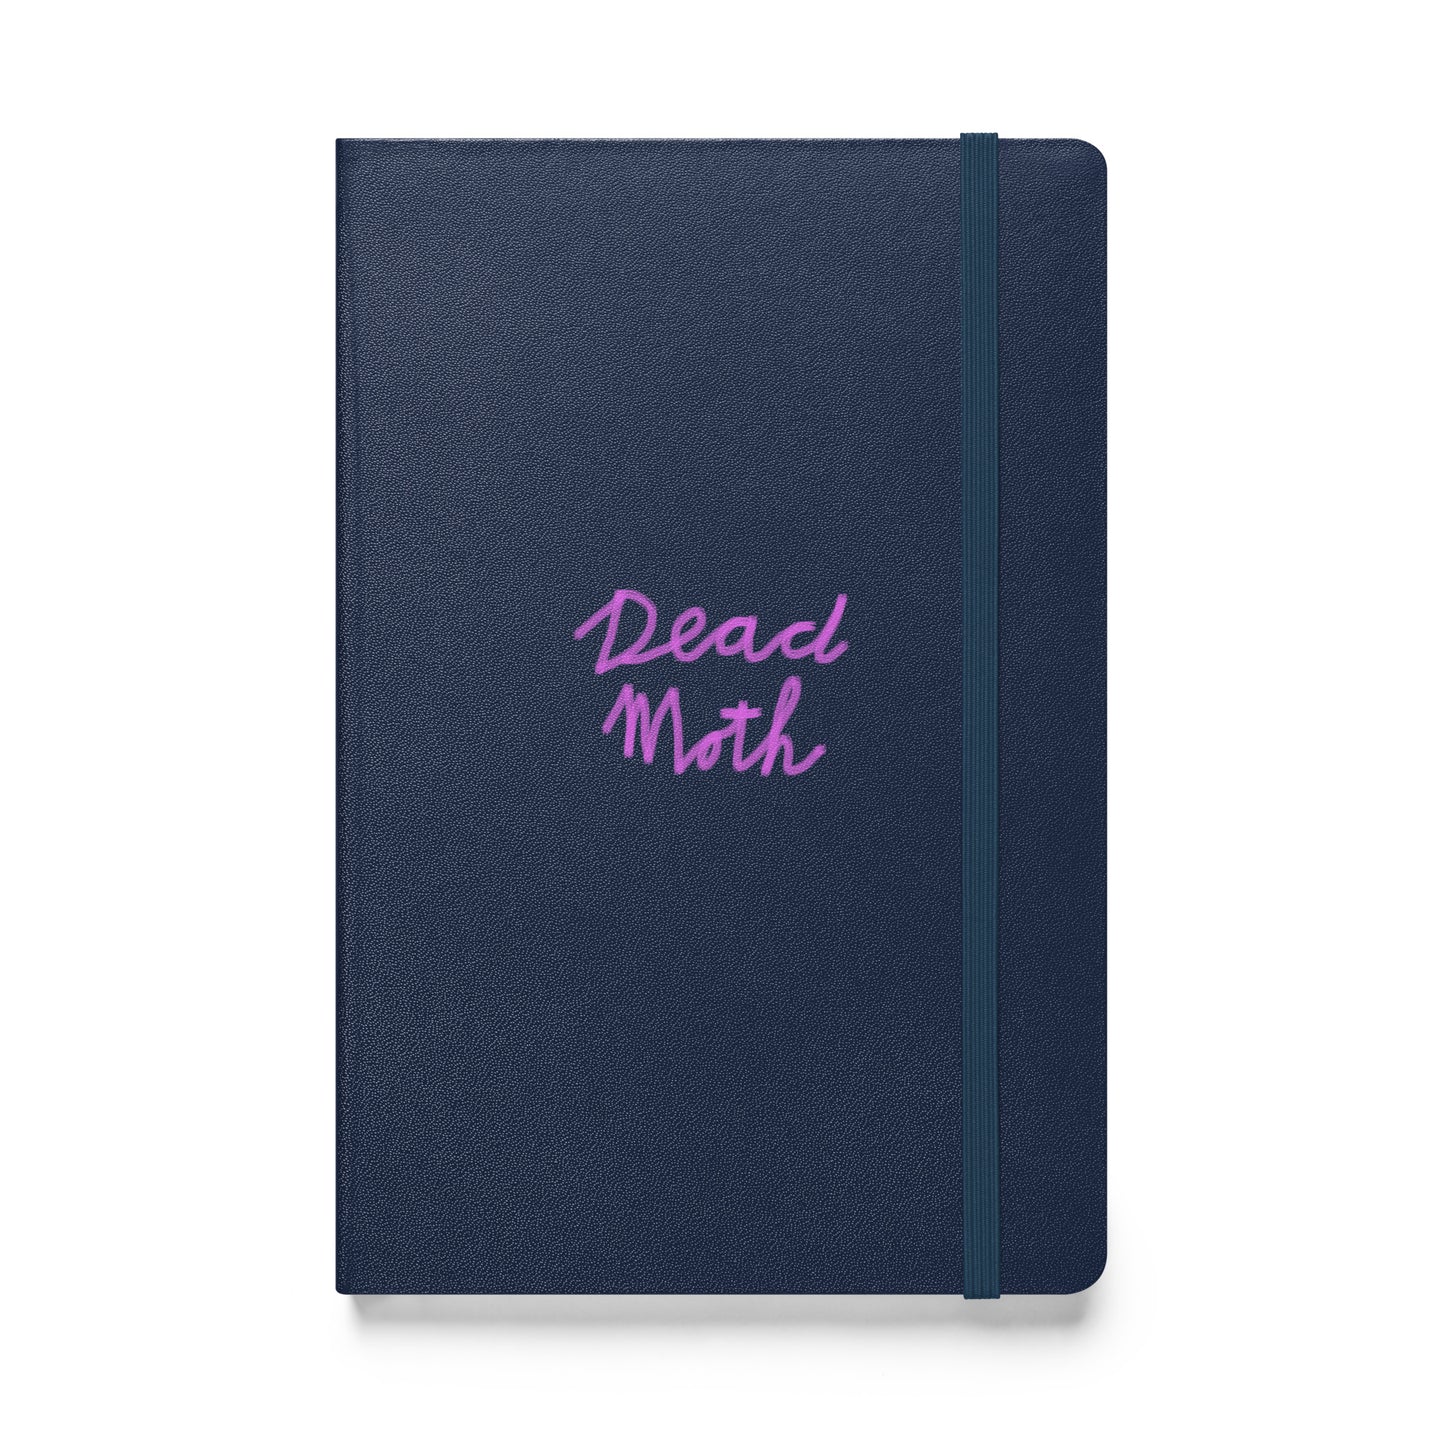 DEAD MOTH Hardcover bound notebook